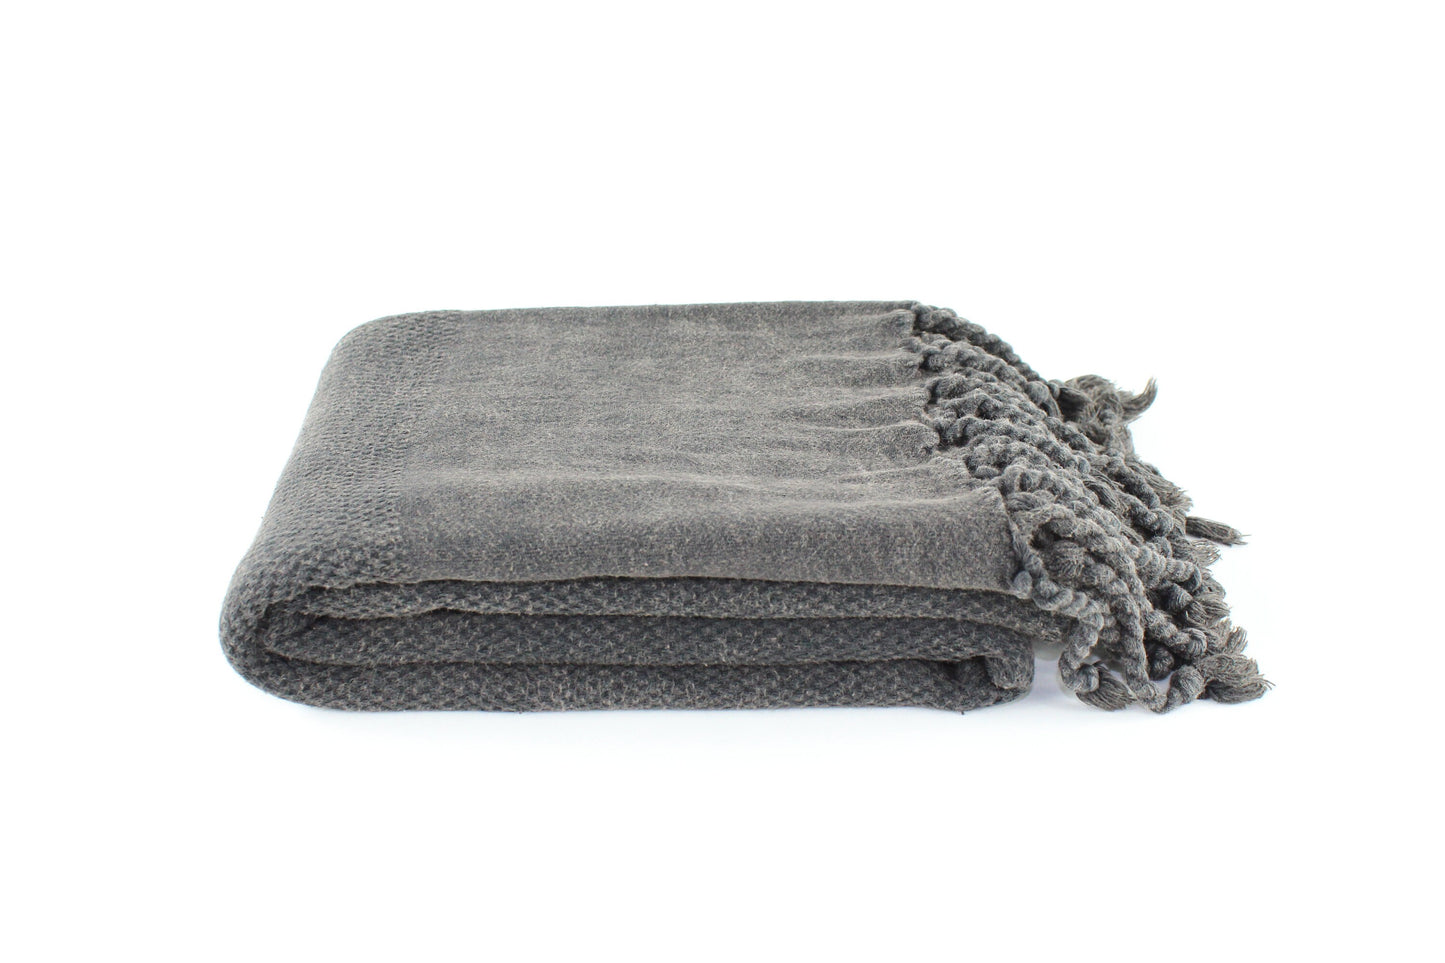 Premium Turkish Stone Washed Towel Peshtemal Fouta (Black)